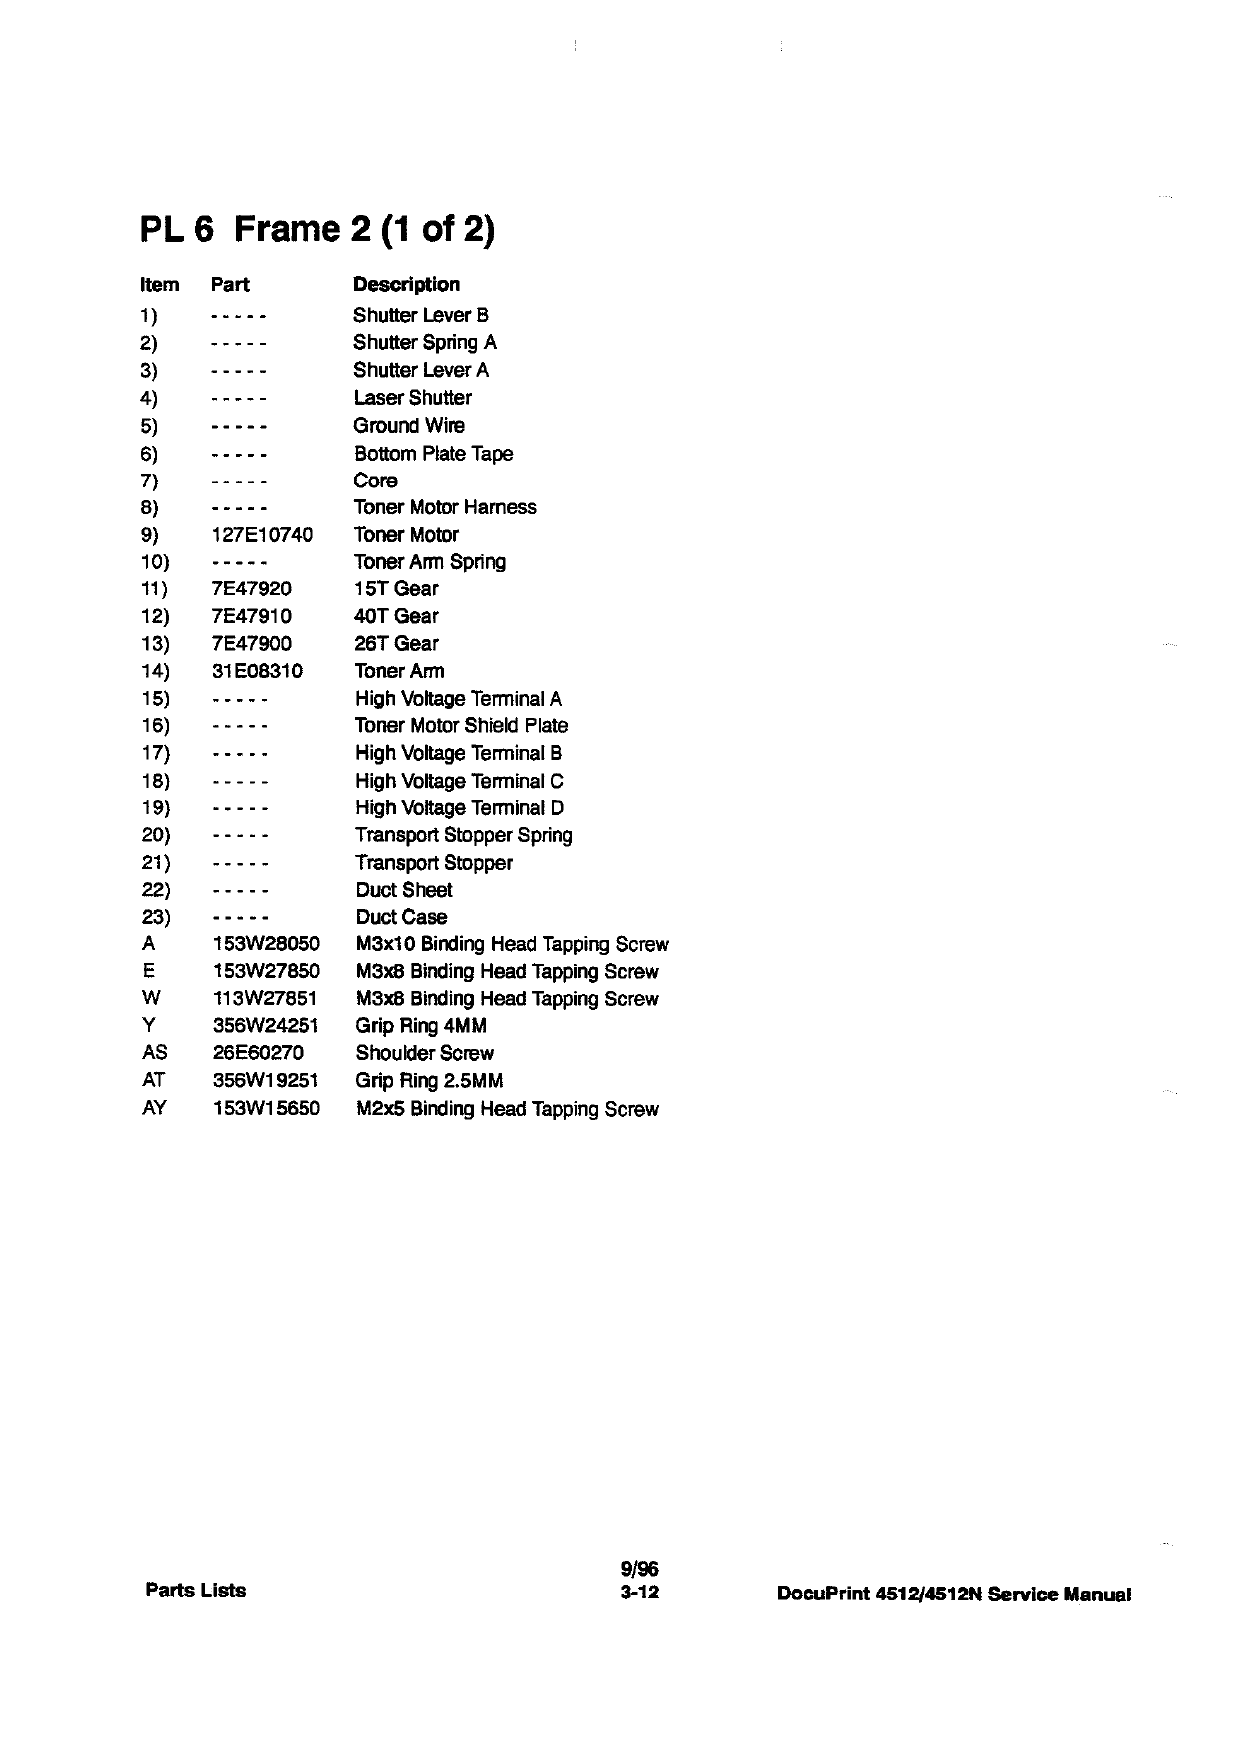 Xerox DocuPrint 4512 Parts List and Service Manual-4